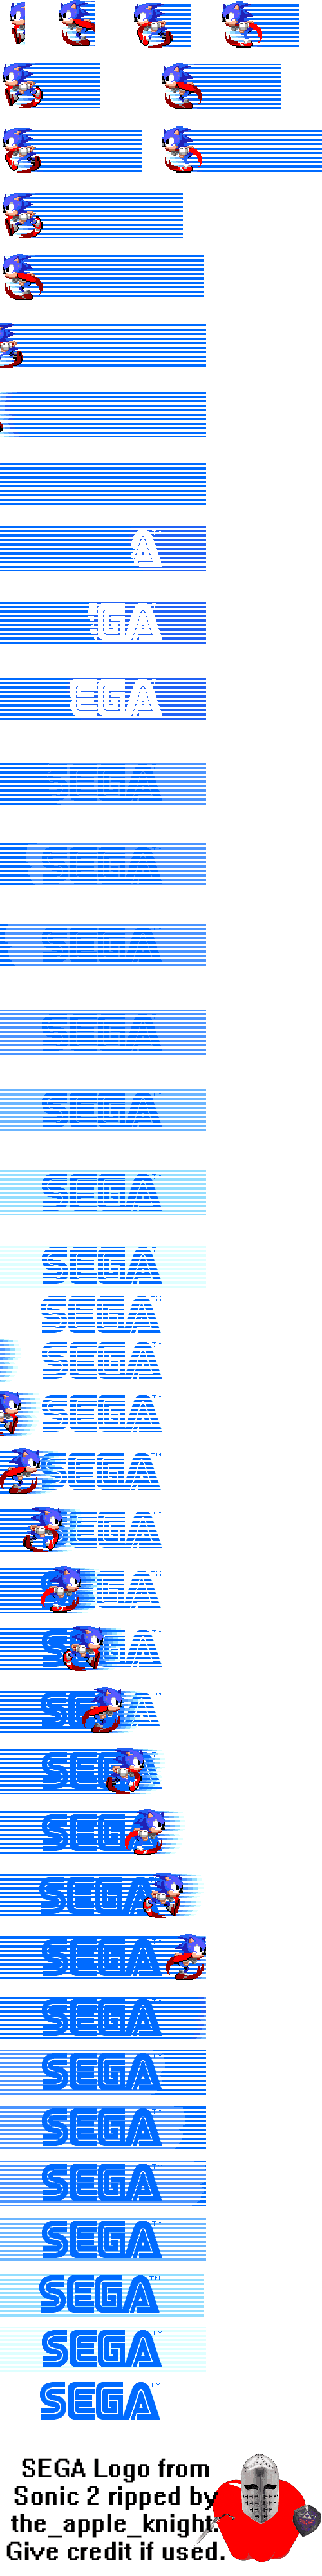 Sonic the Hedgehog 2 - SEGA Logo